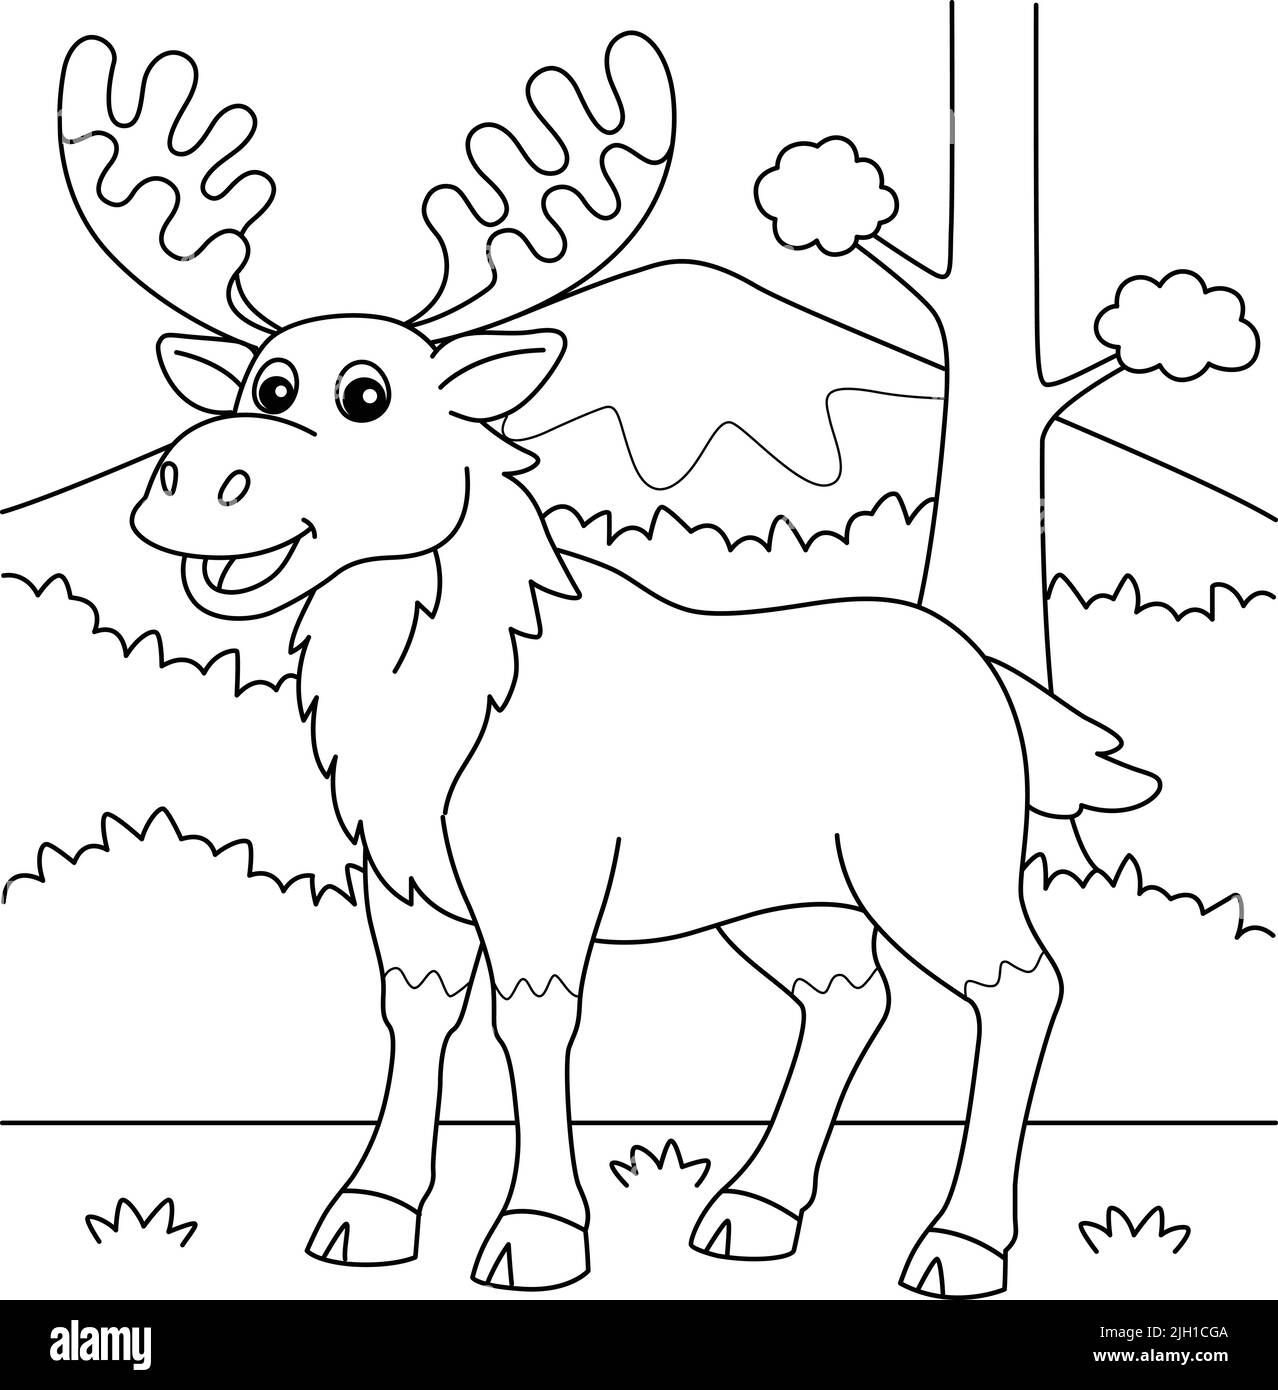 Moose Animal Coloring Page for Kids Illustrazione Vettoriale